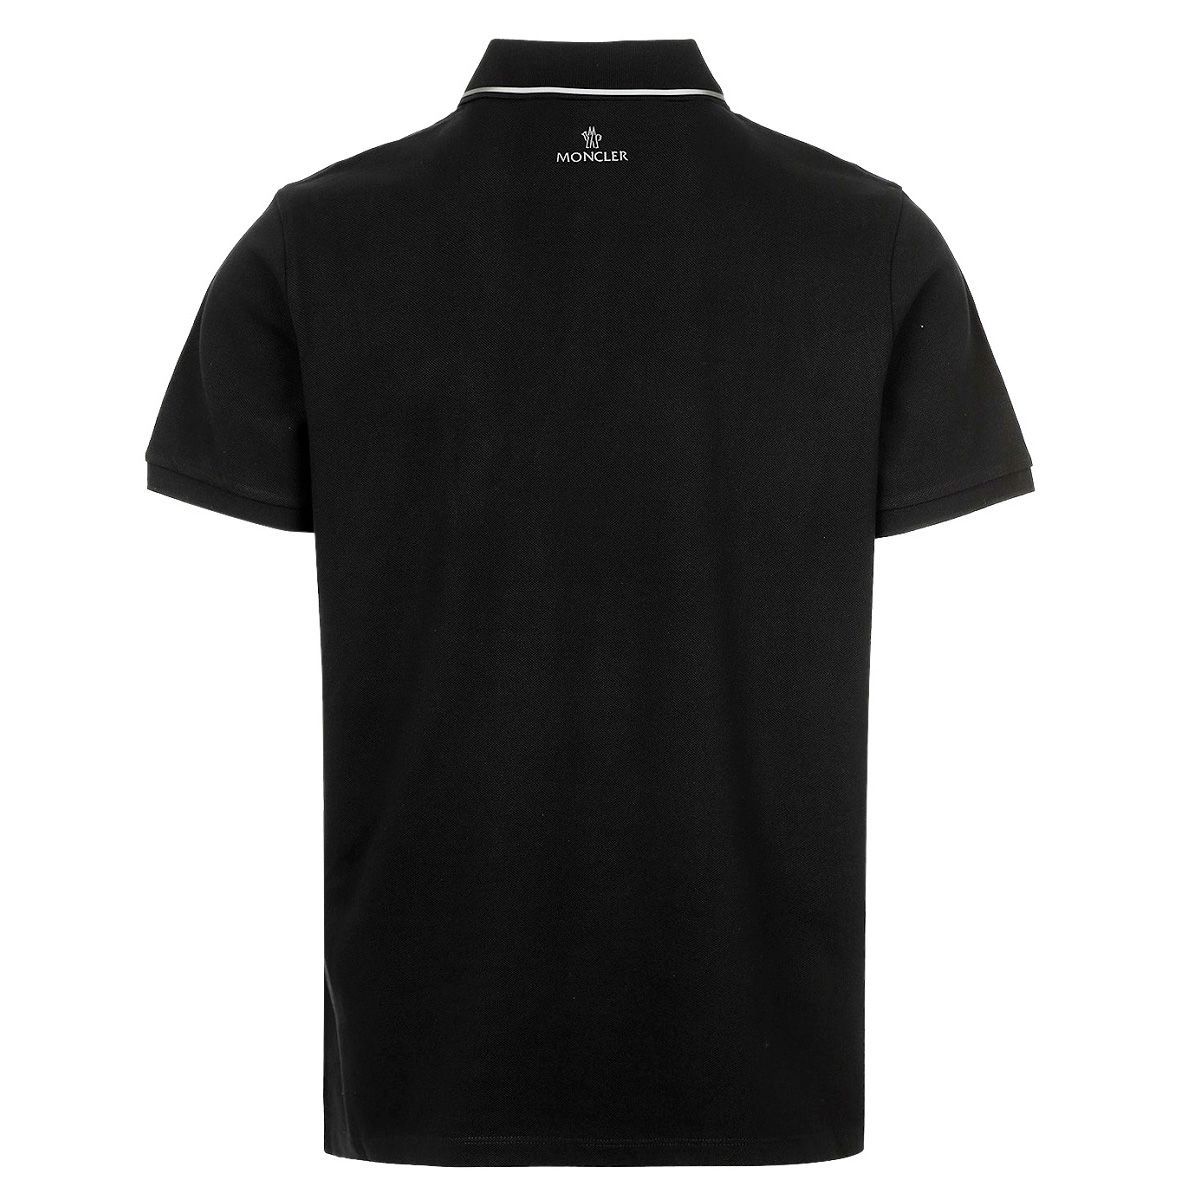 101 MONCLER モンクレール 8A00003 84556 ブラック ポロシャツ 半袖 size S